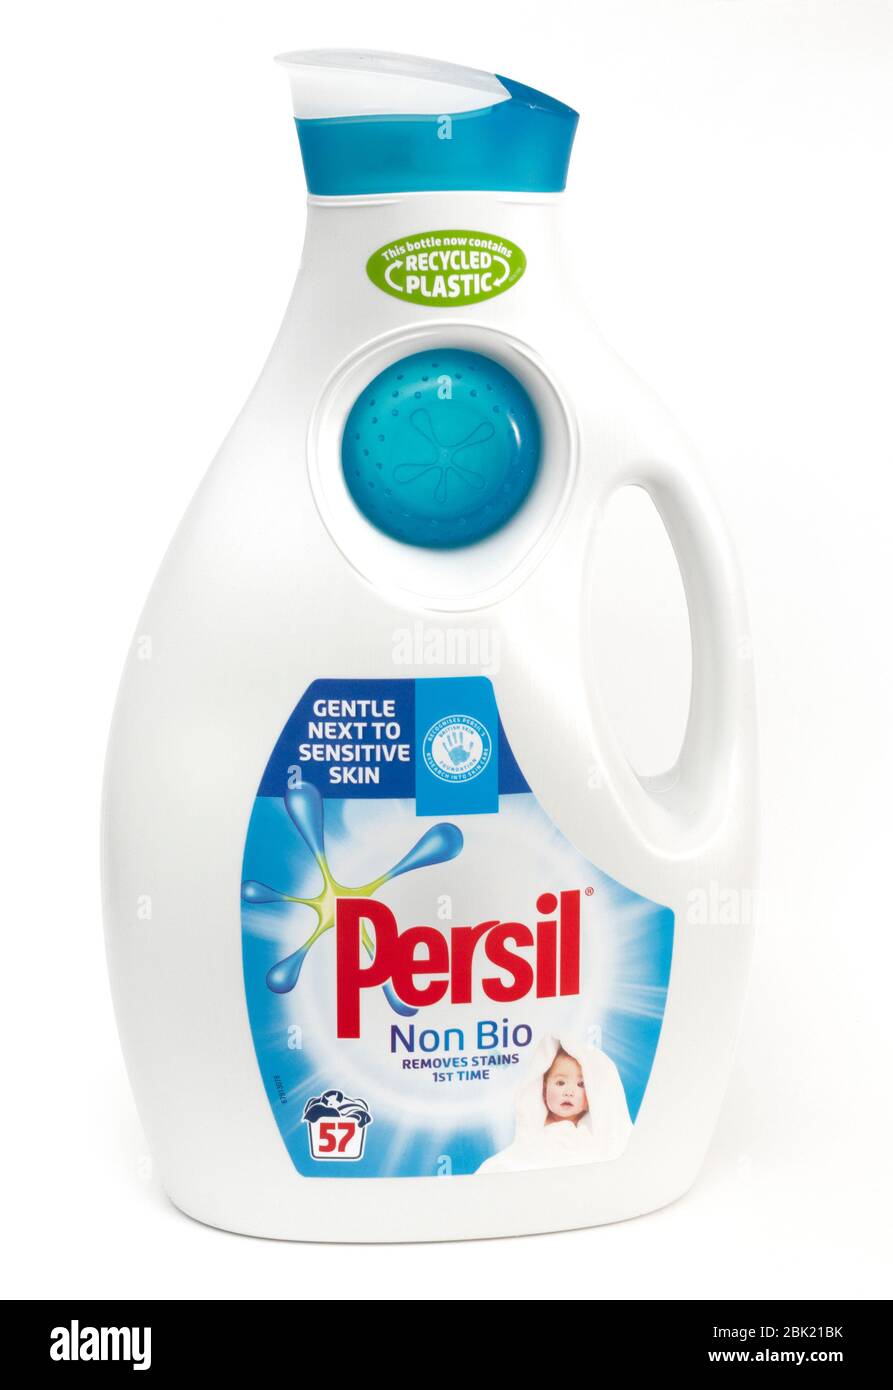 Persil non bio,wash liquid,recycled plastic bottle Stock Photo - Alamy